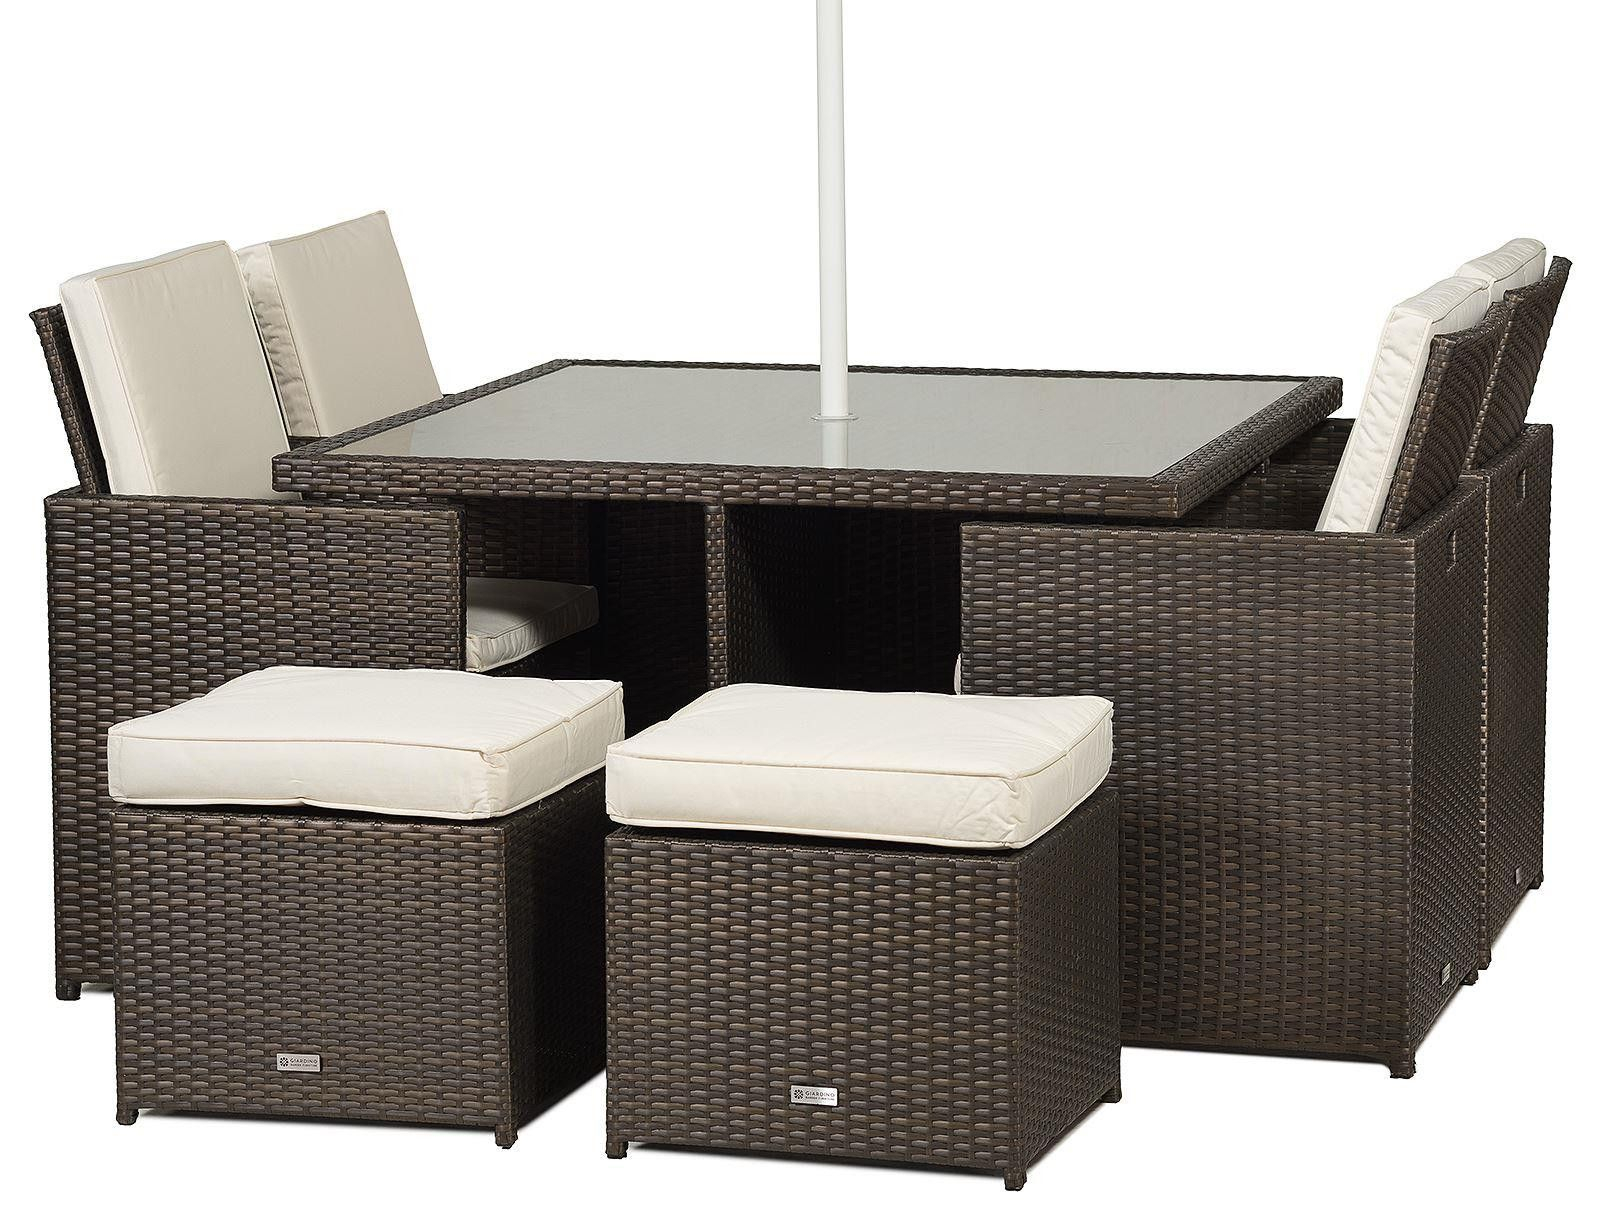 Giardino Rattan Garden Furniture 4 Seat Cube Dining Set regarding size 1600 X 1216